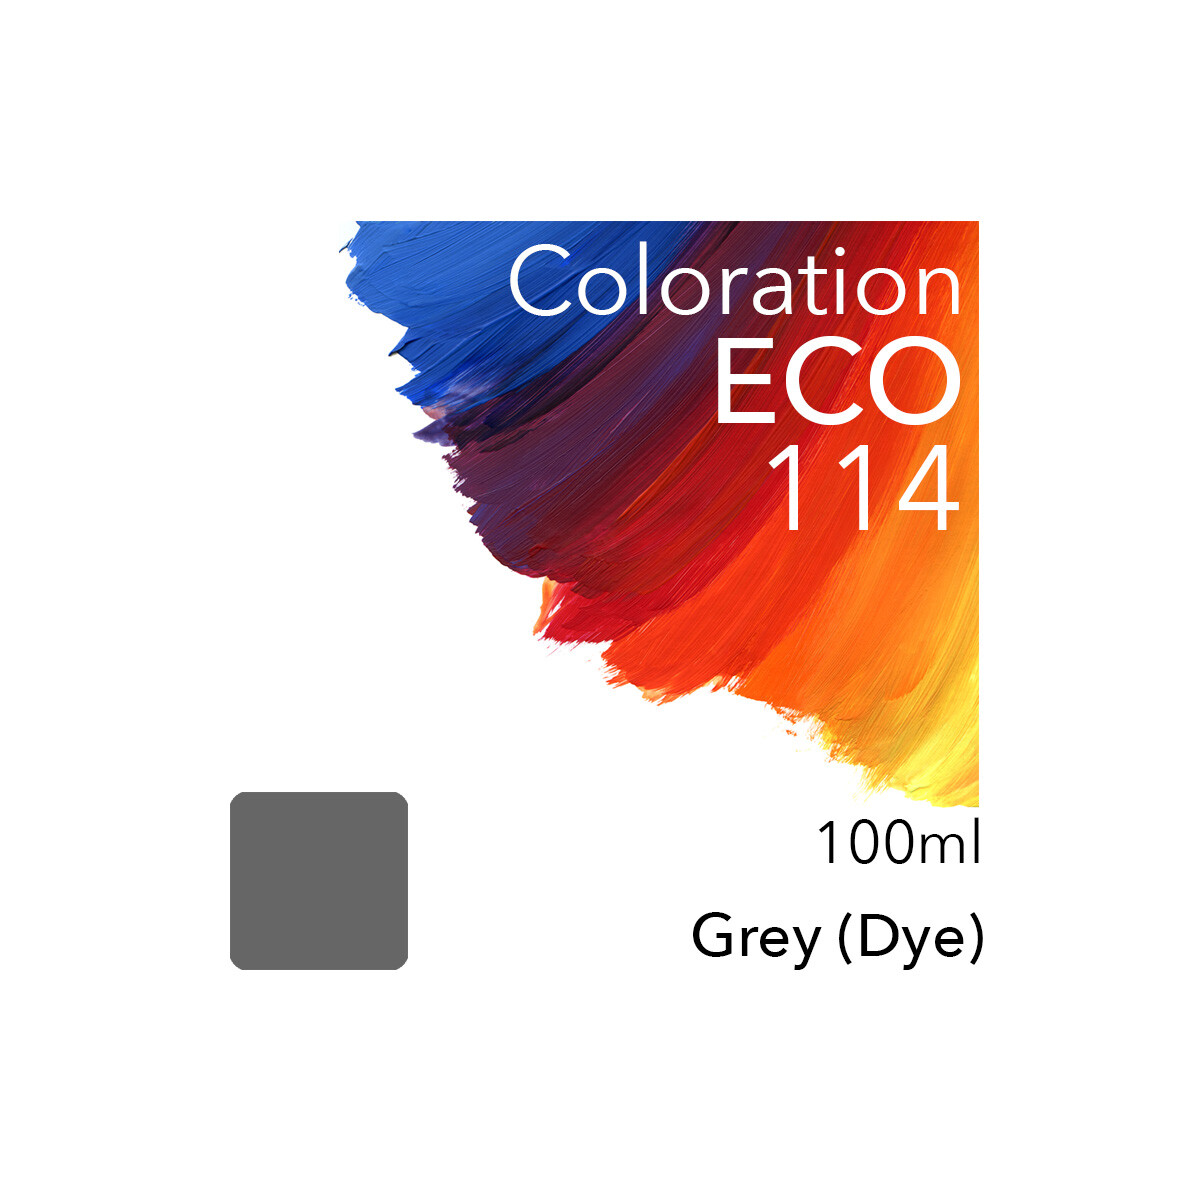 Coloration ECO kompatibel zu Epson 114 GY (Grey) 100ml